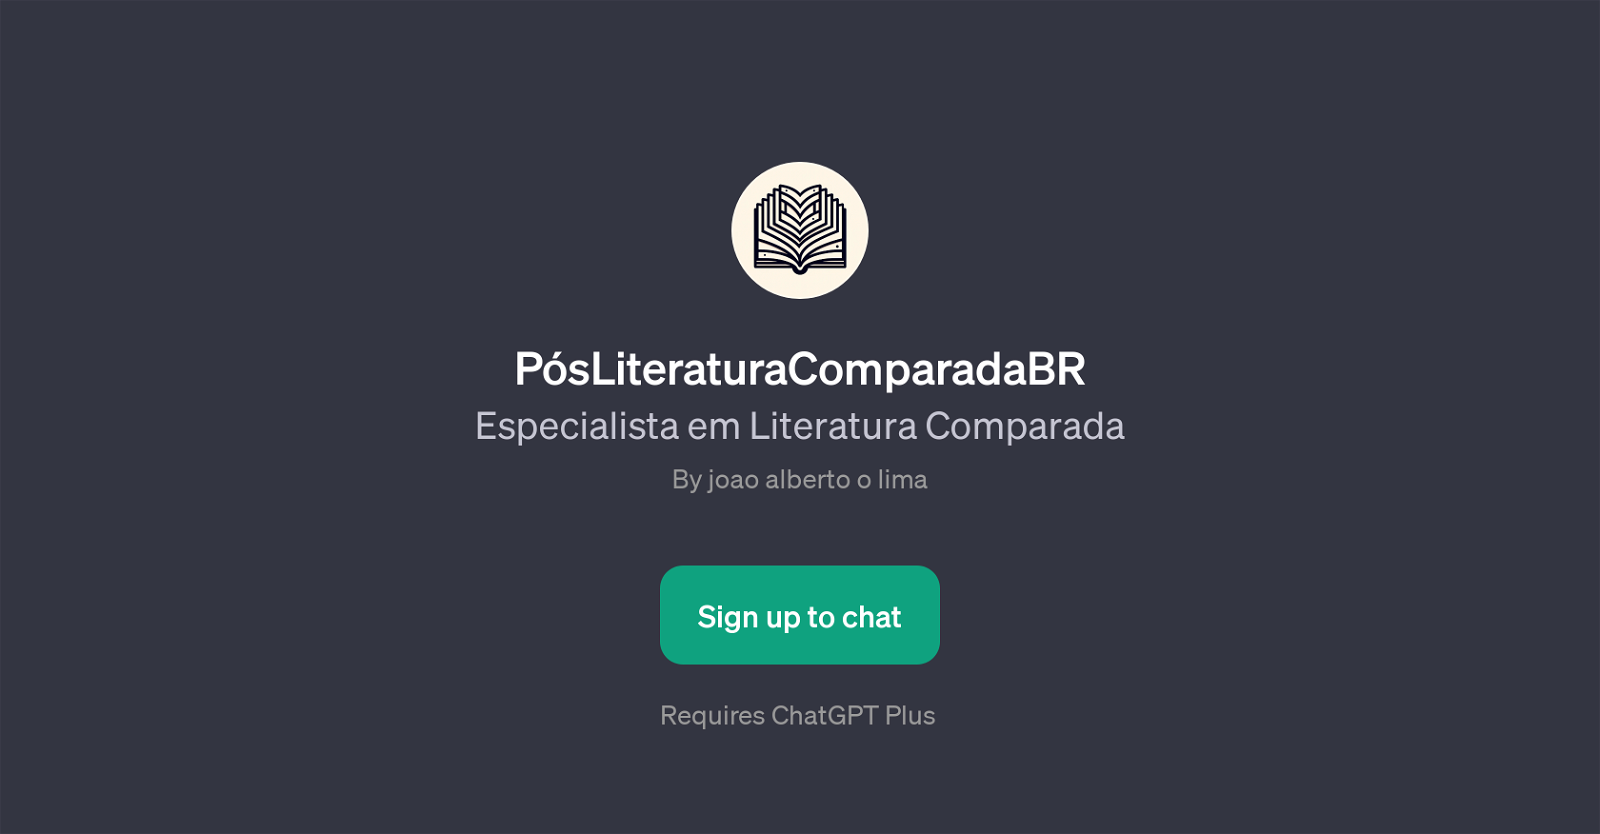 PsLiteraturaComparadaBR website